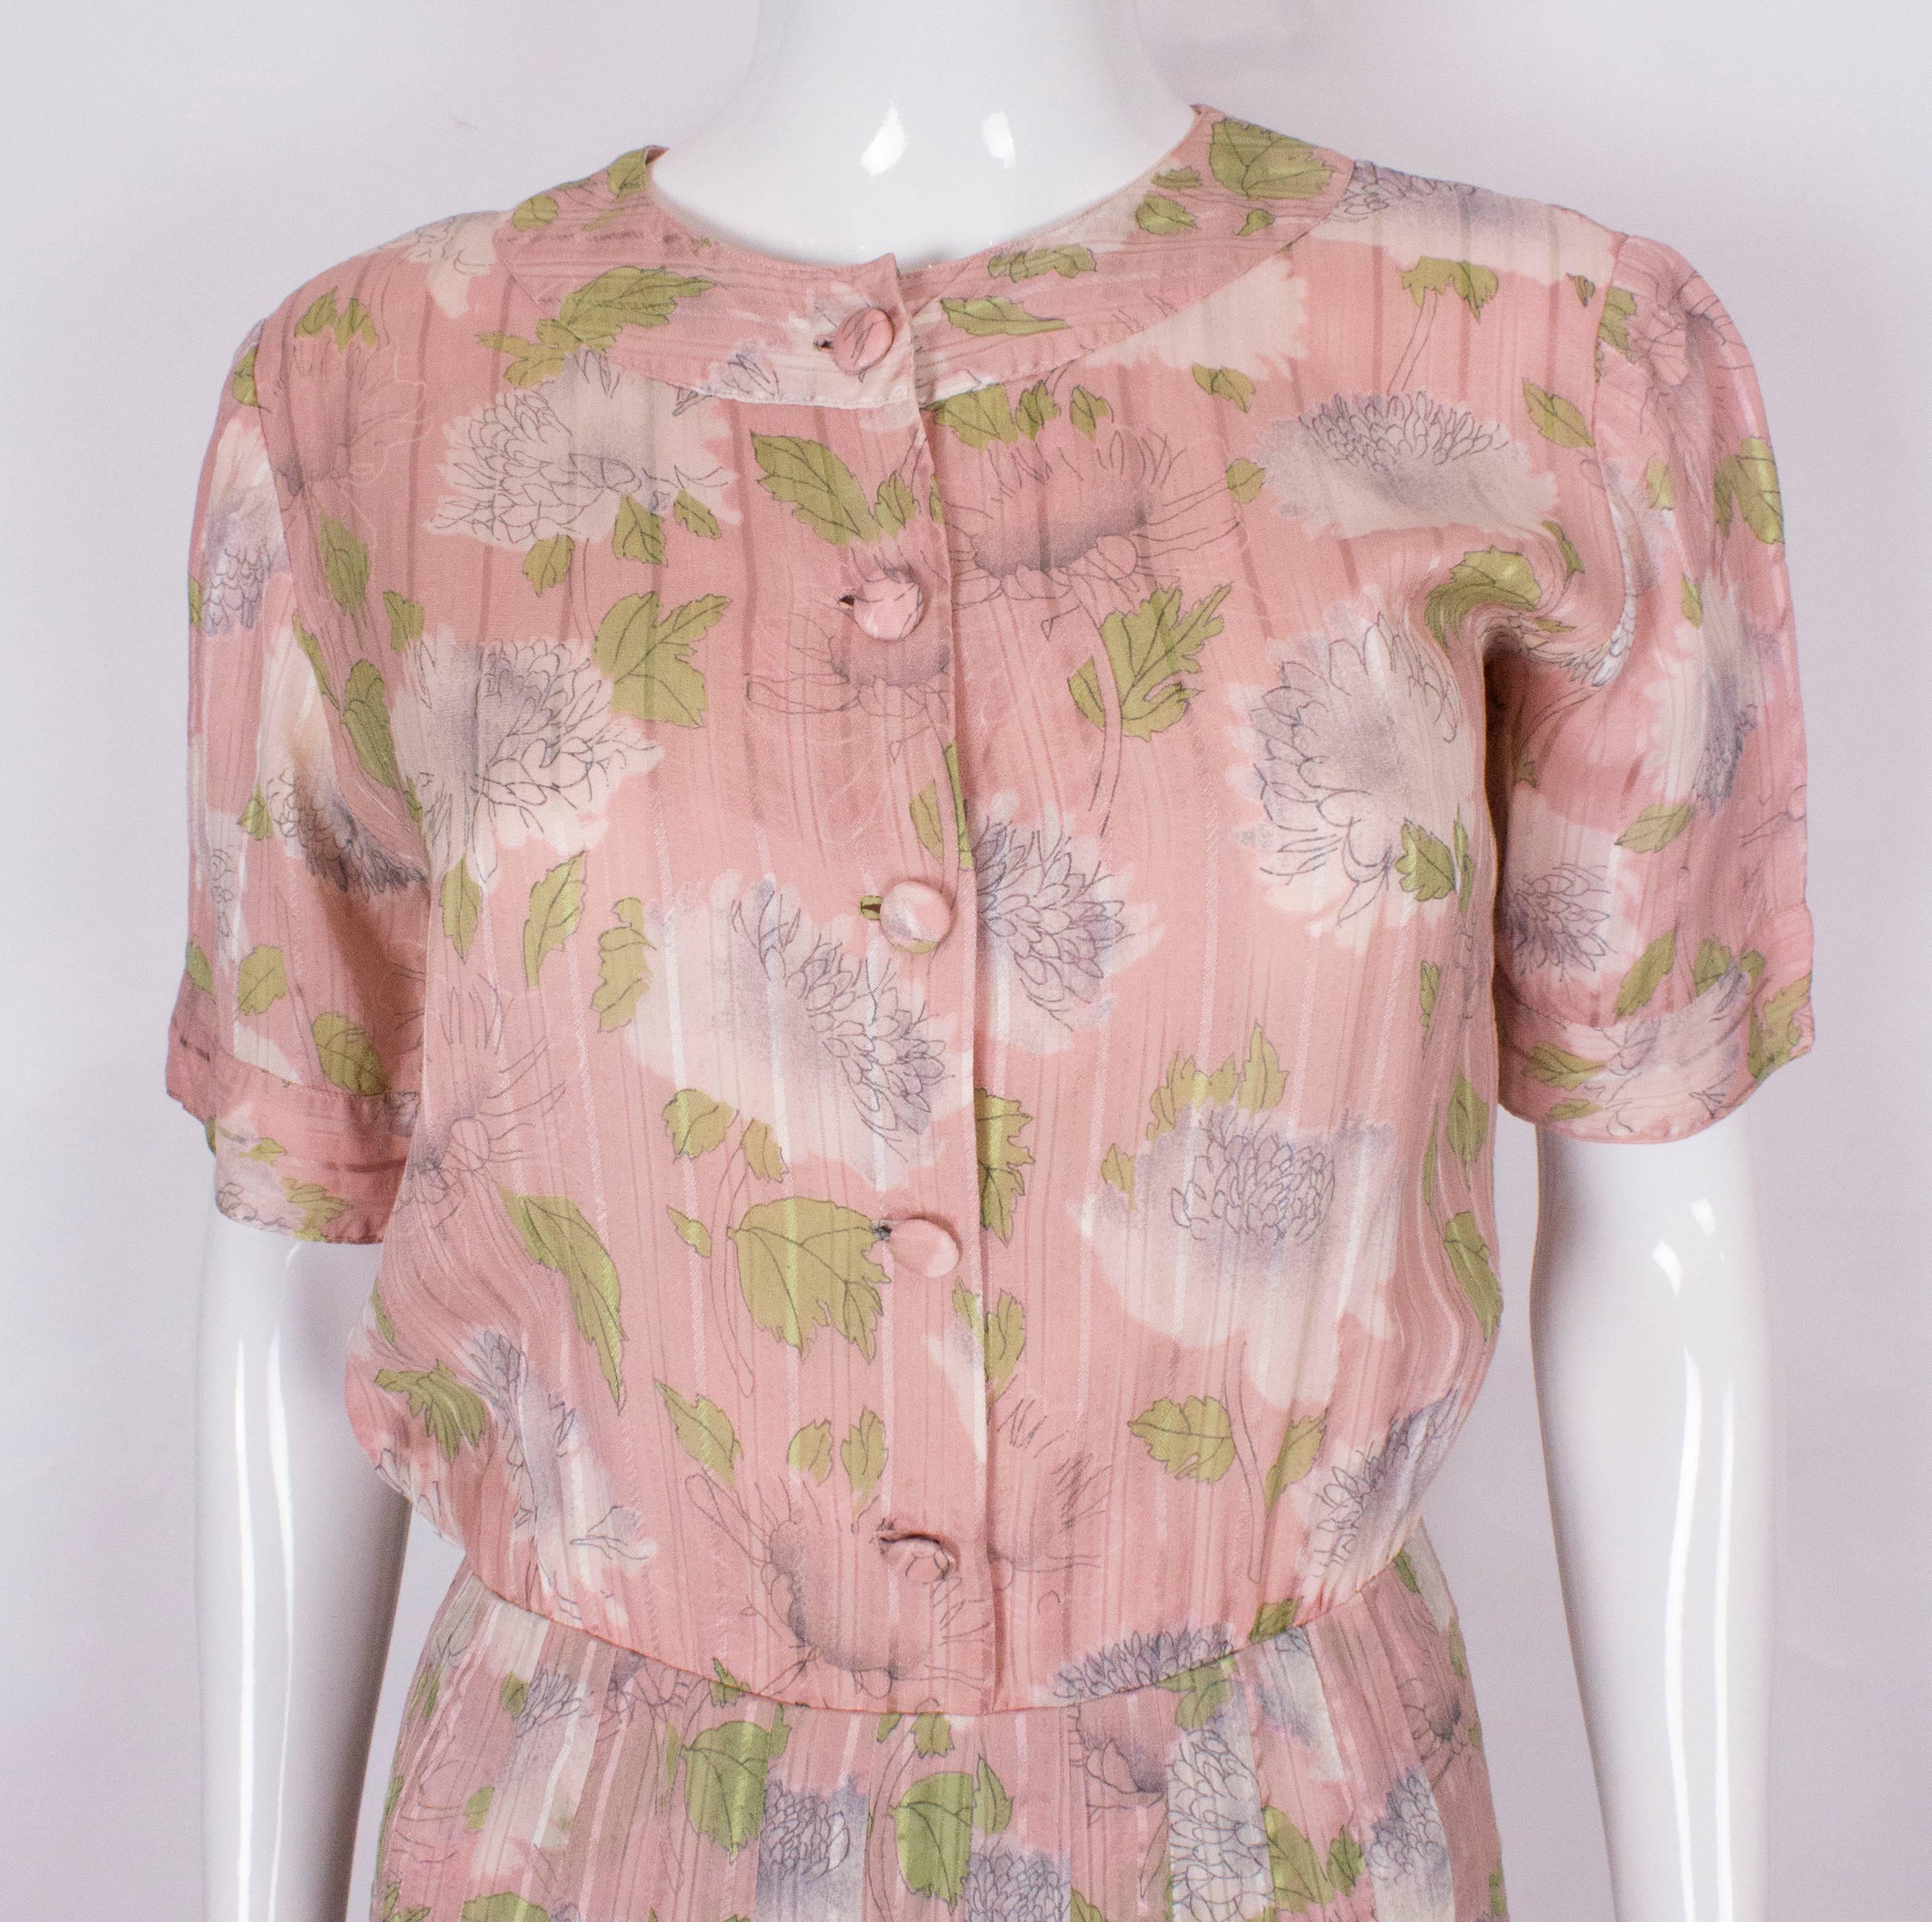 Women's A vintage 1940s floral print, pink summer cotton day dress